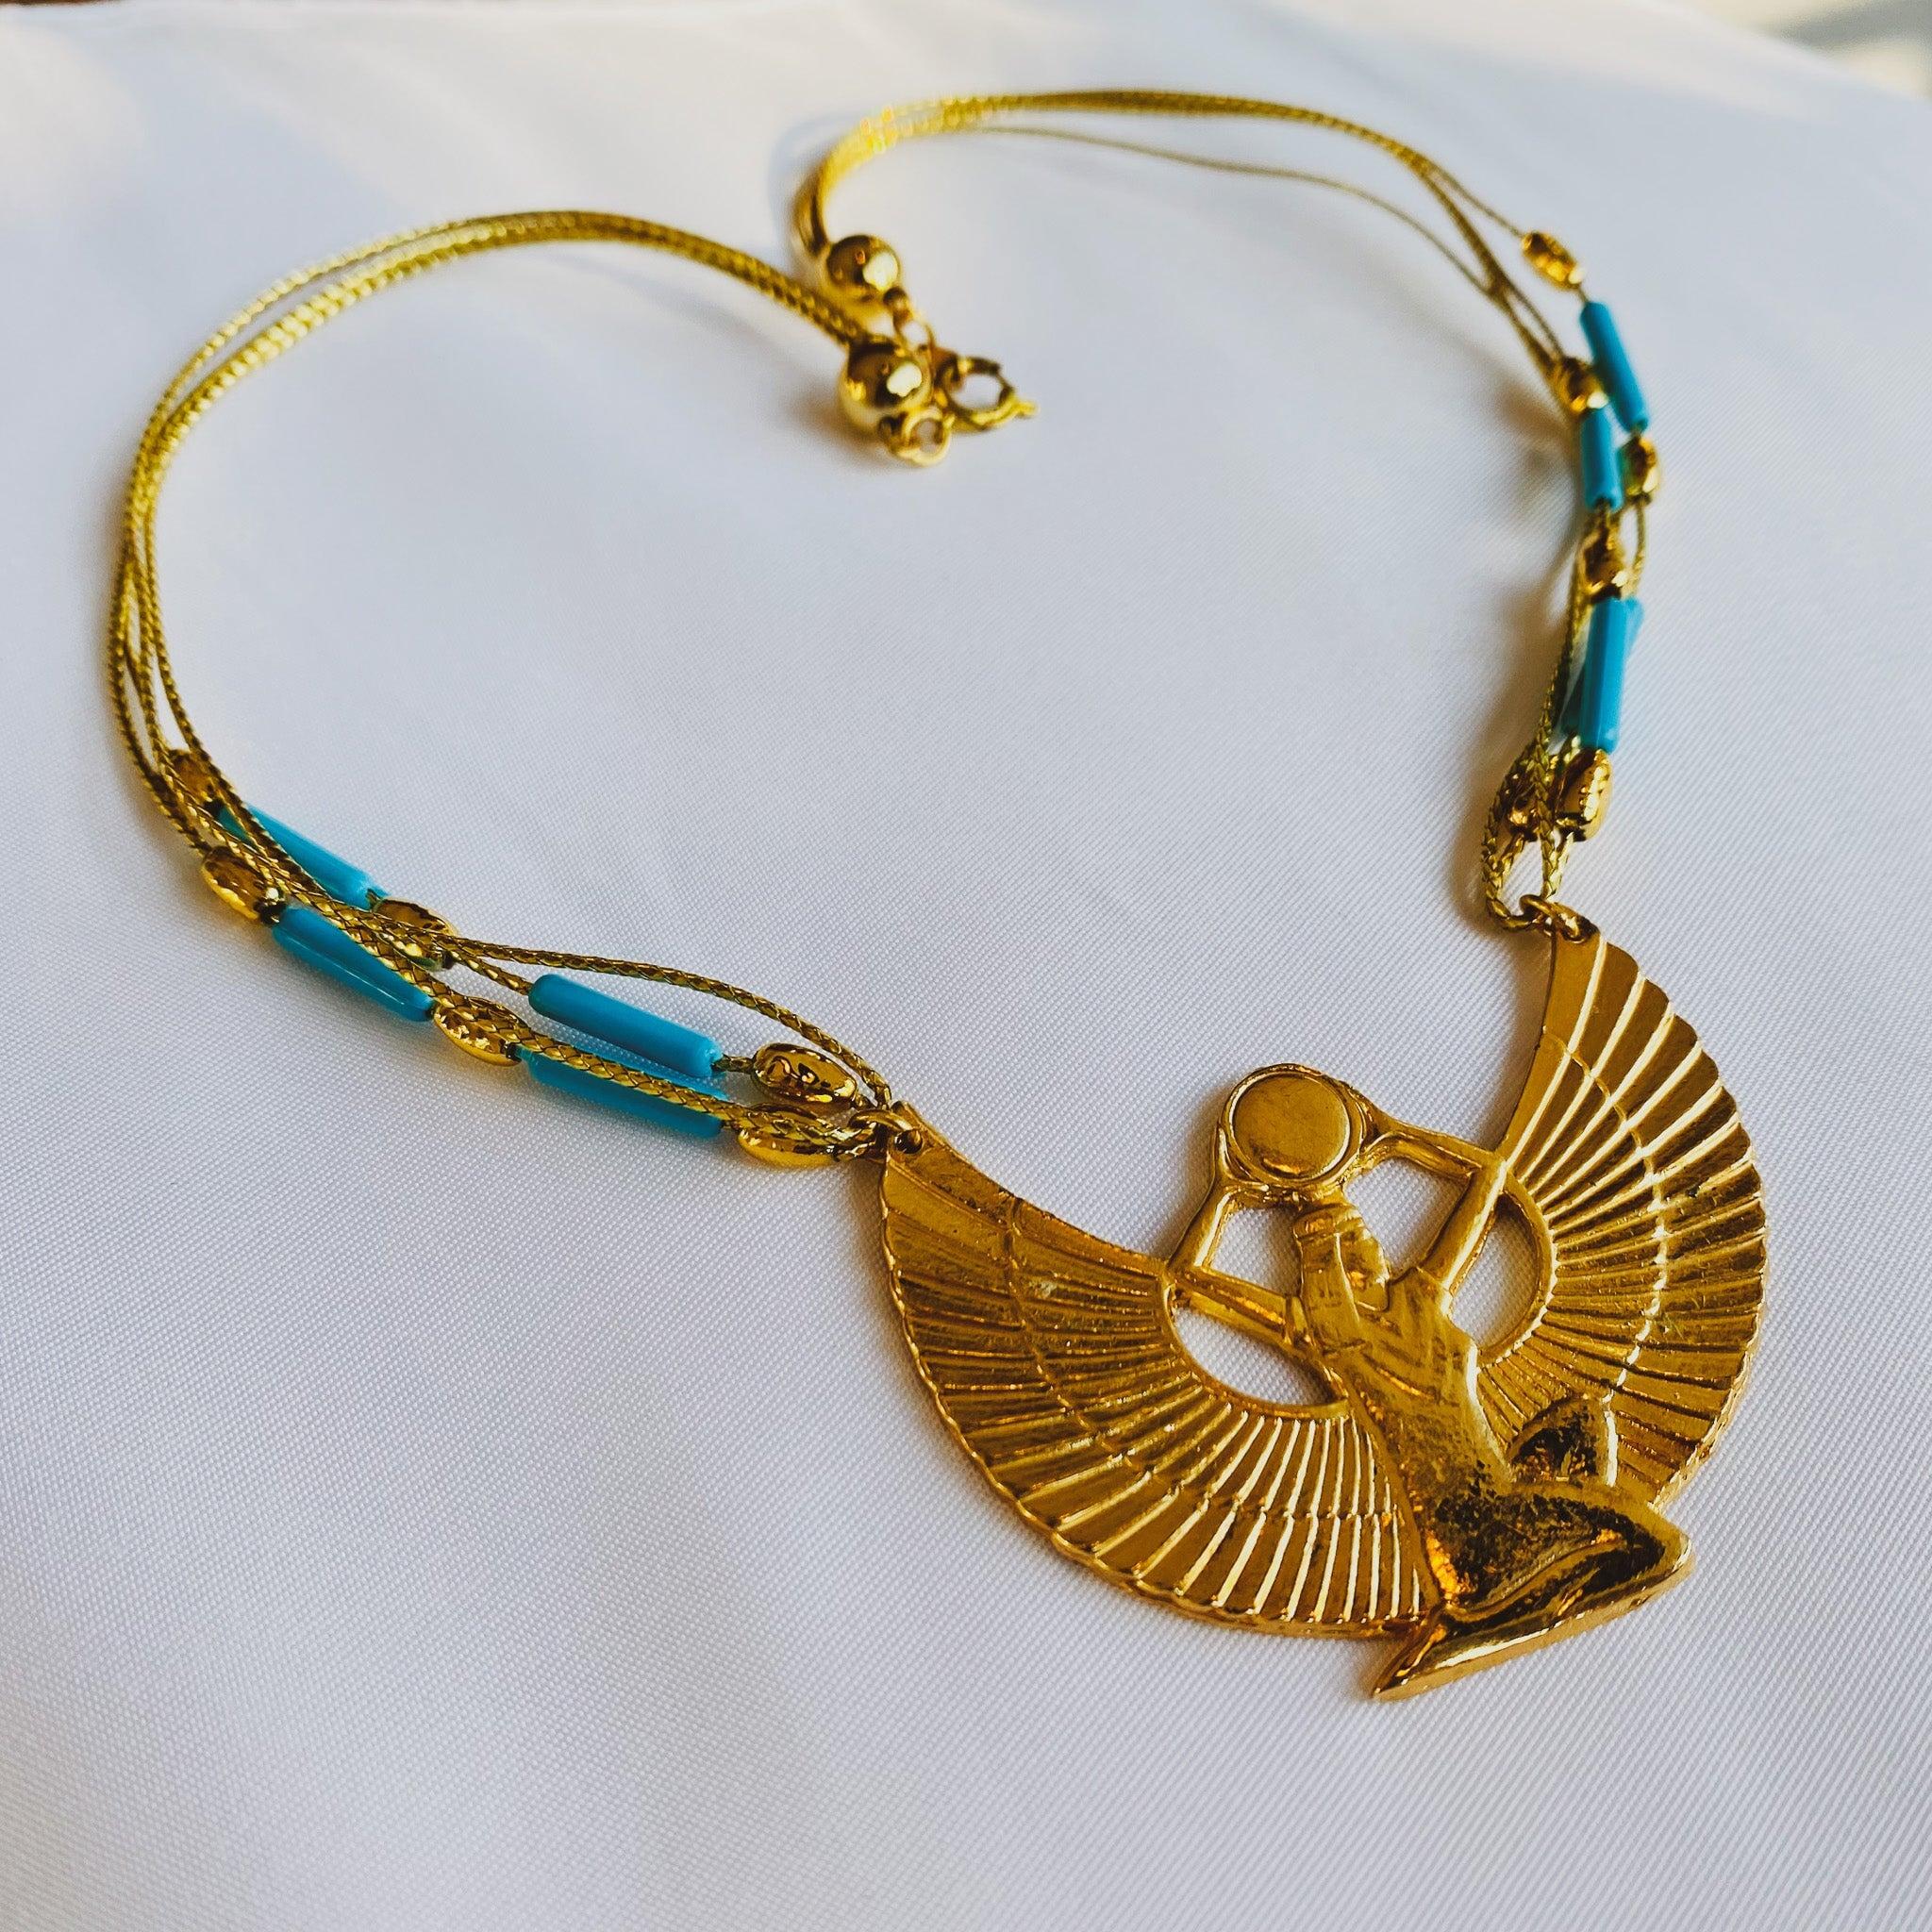 Egyptian Revival Vintage 1970s Necklace - 18 Carat Gold Plated Vintage Deadstock